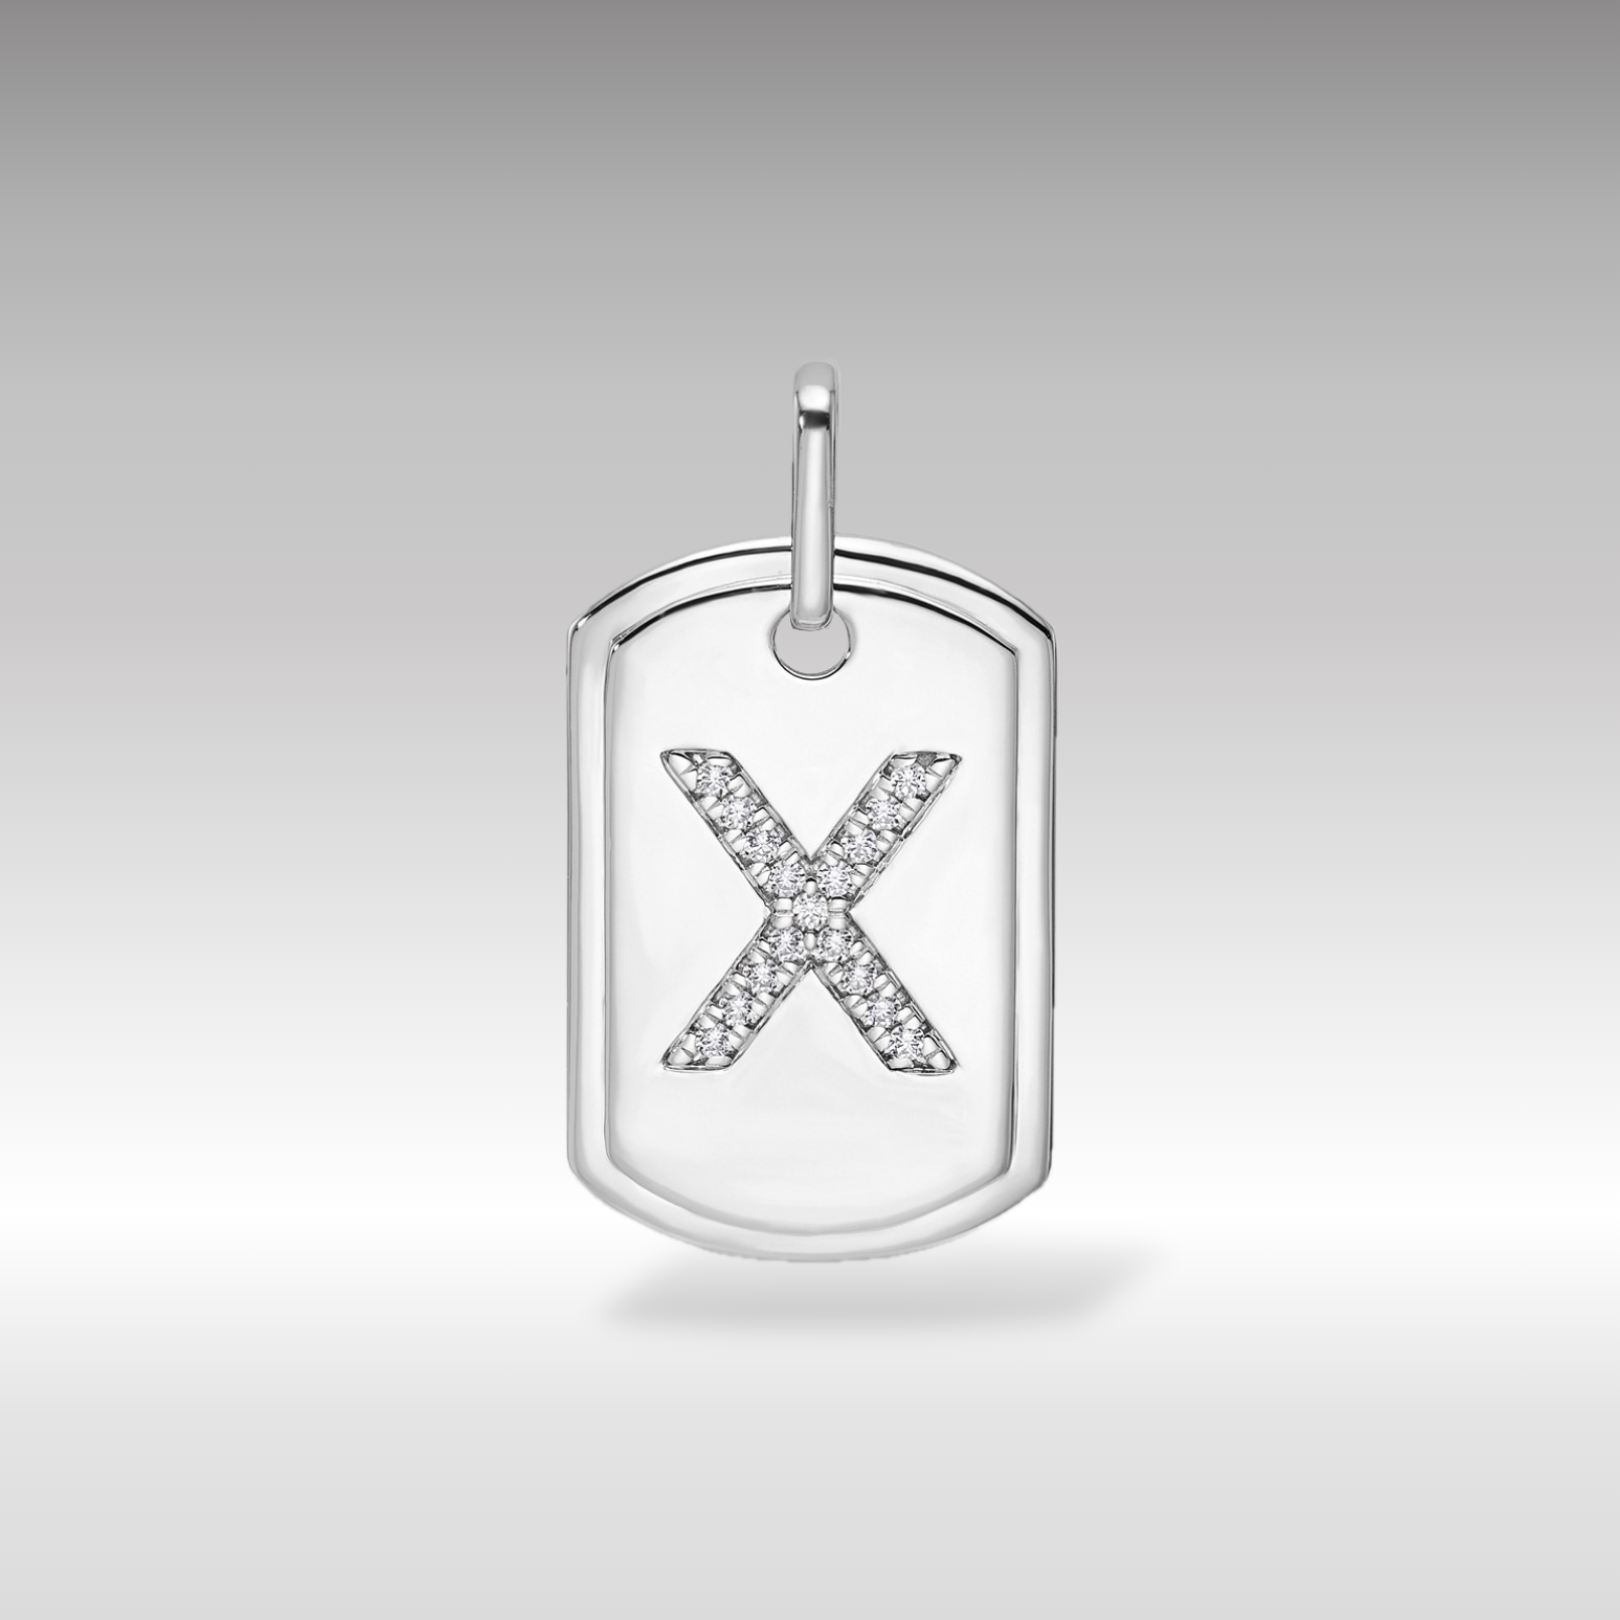 14K White Gold Initial "X" Dog Tag With Genuine Diamonds - Charlie & Co. Jewelry